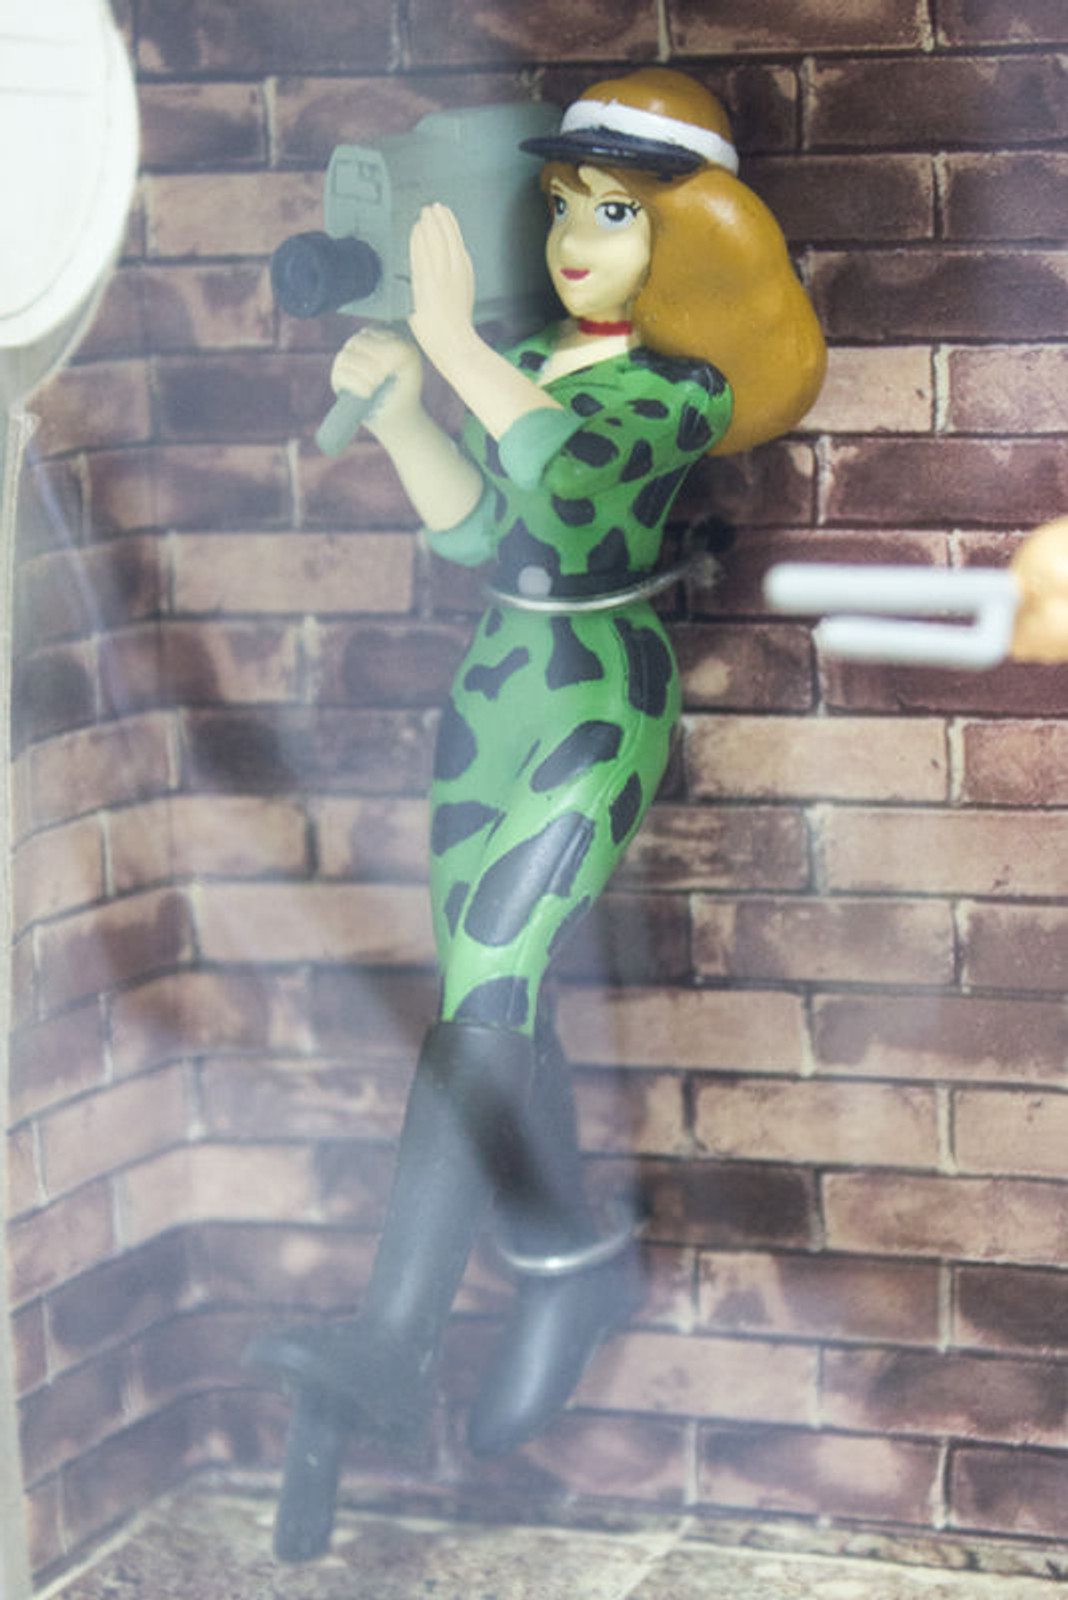 Lupin the Third (3rd) Fujiko & Zenigata Diorama Figure Cagliostro JAPAN ANIME MANGA